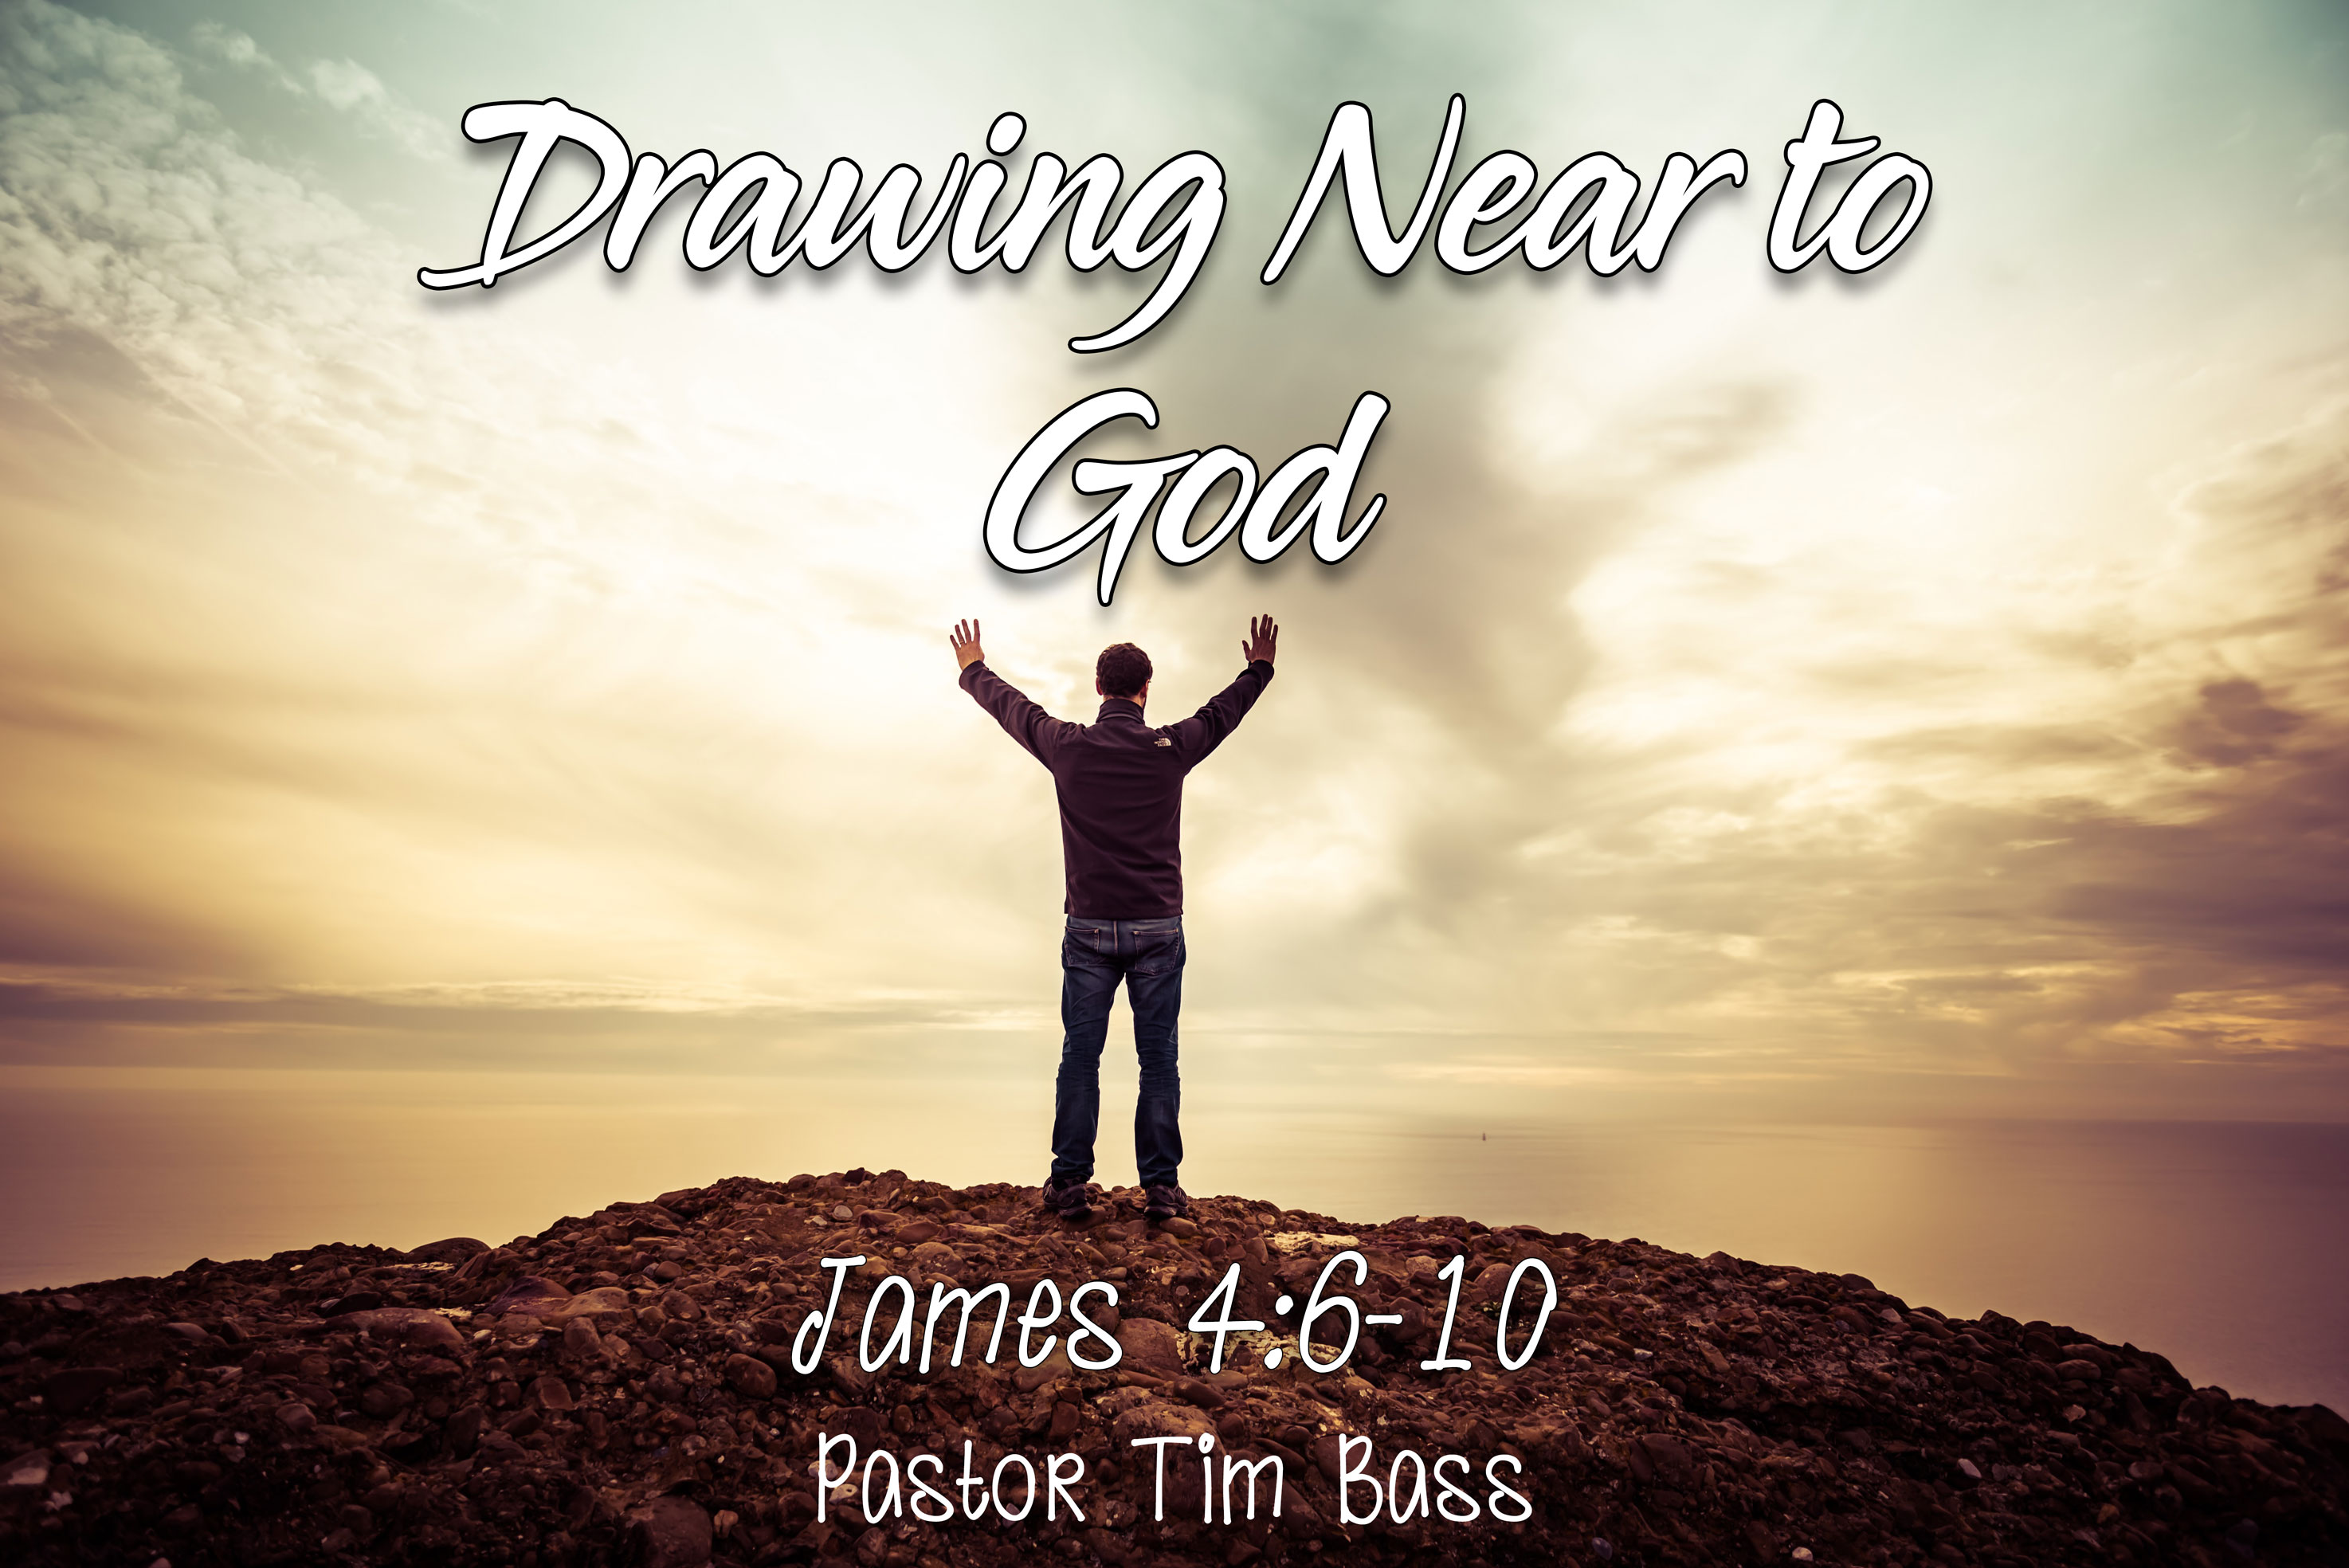 Drawing Near to God LBC Worship